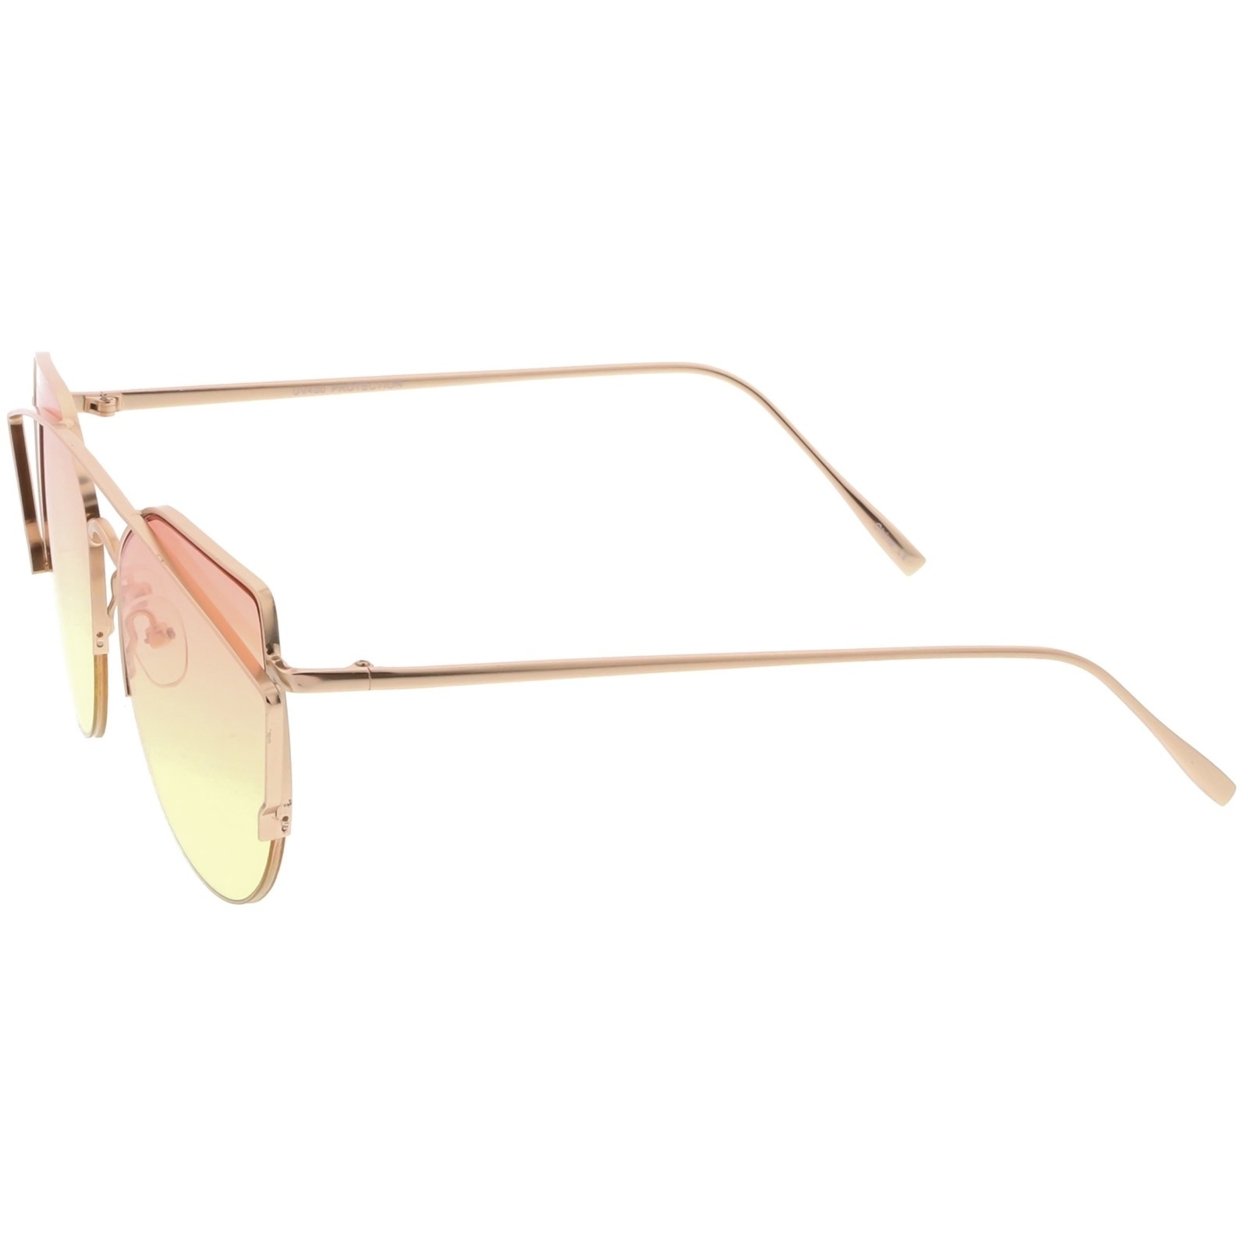 Women's Semi Rimless Metal Brow Bar Round Colored Flat Lens Cat Eye Sunglasses - Black / Brown Gradient